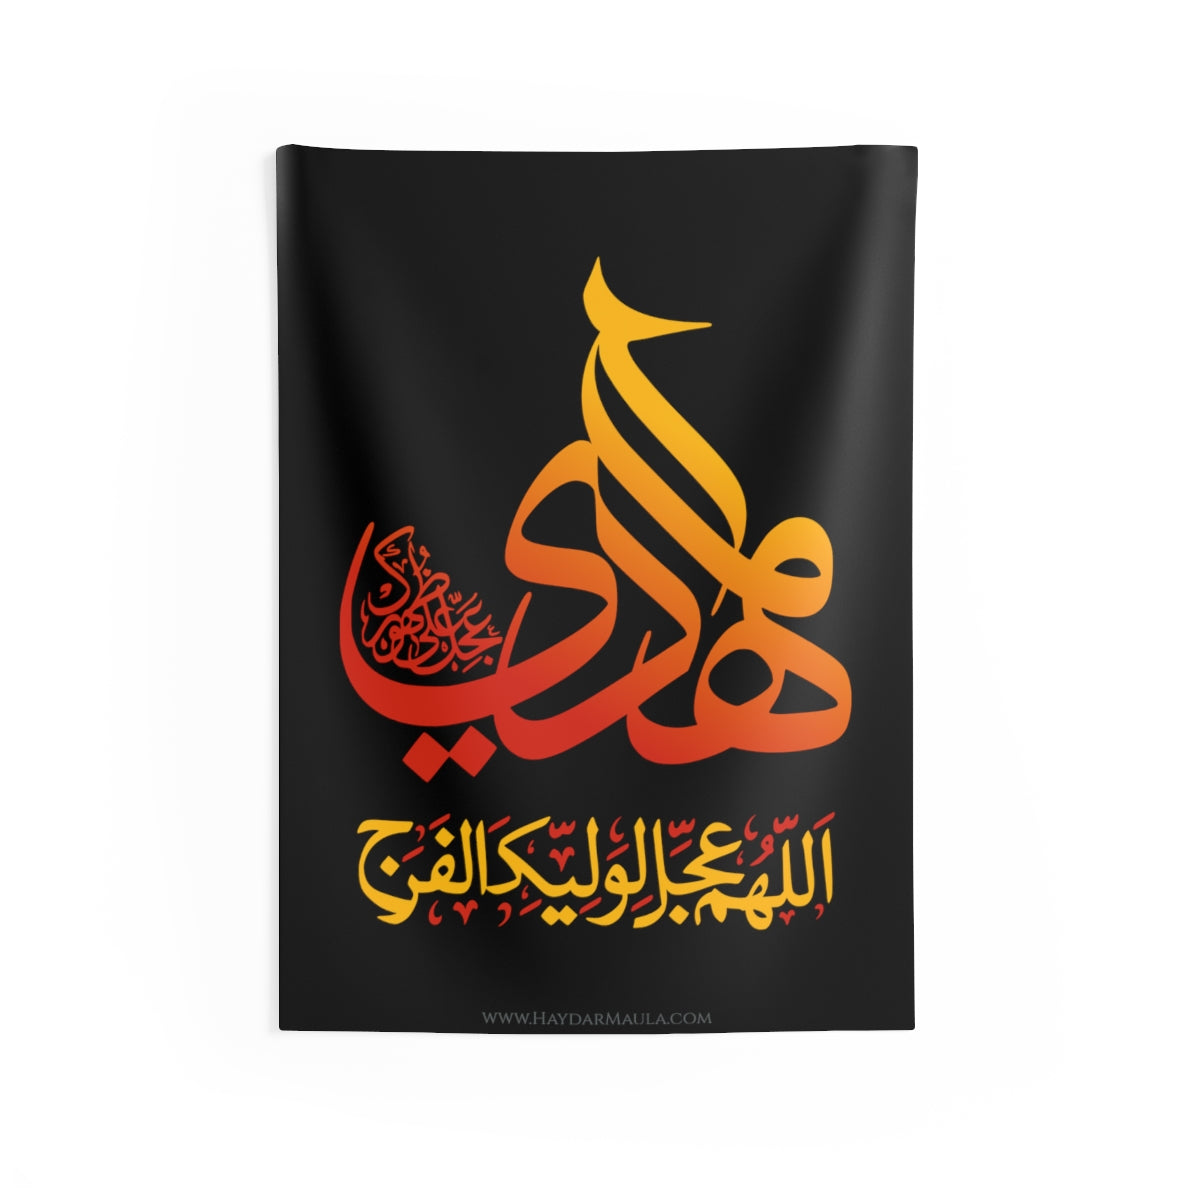 Ya Mahdi (as) Allahumma 'Ajjil Li Waliyyekal Faraj - Wall Tapestry Flag Banner